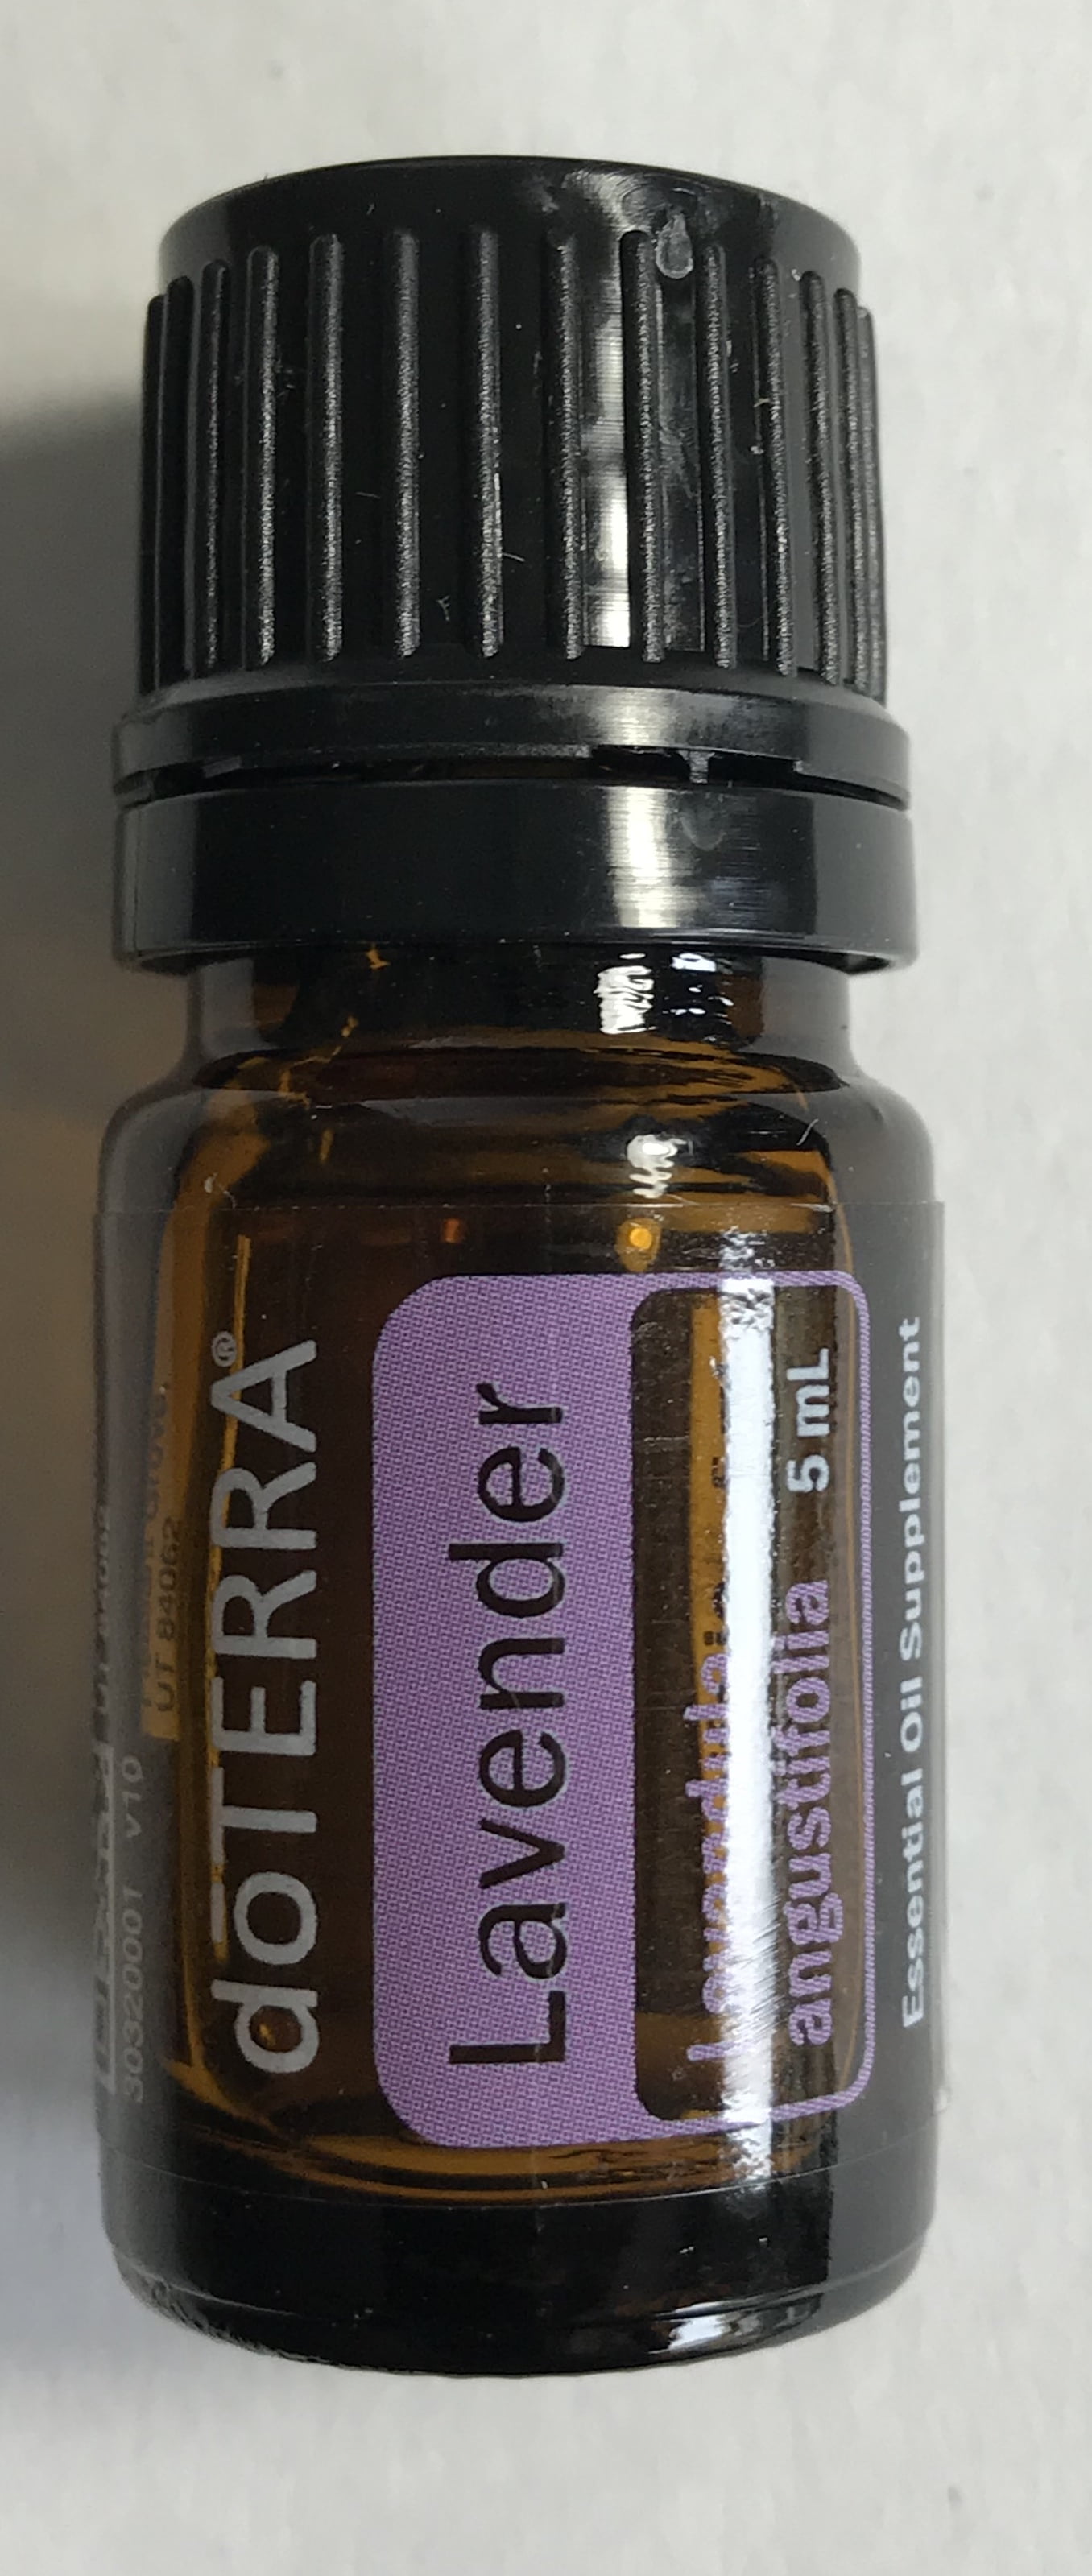 doTerra Lavender Essential Oil Supplement 5ml - Walmart.com